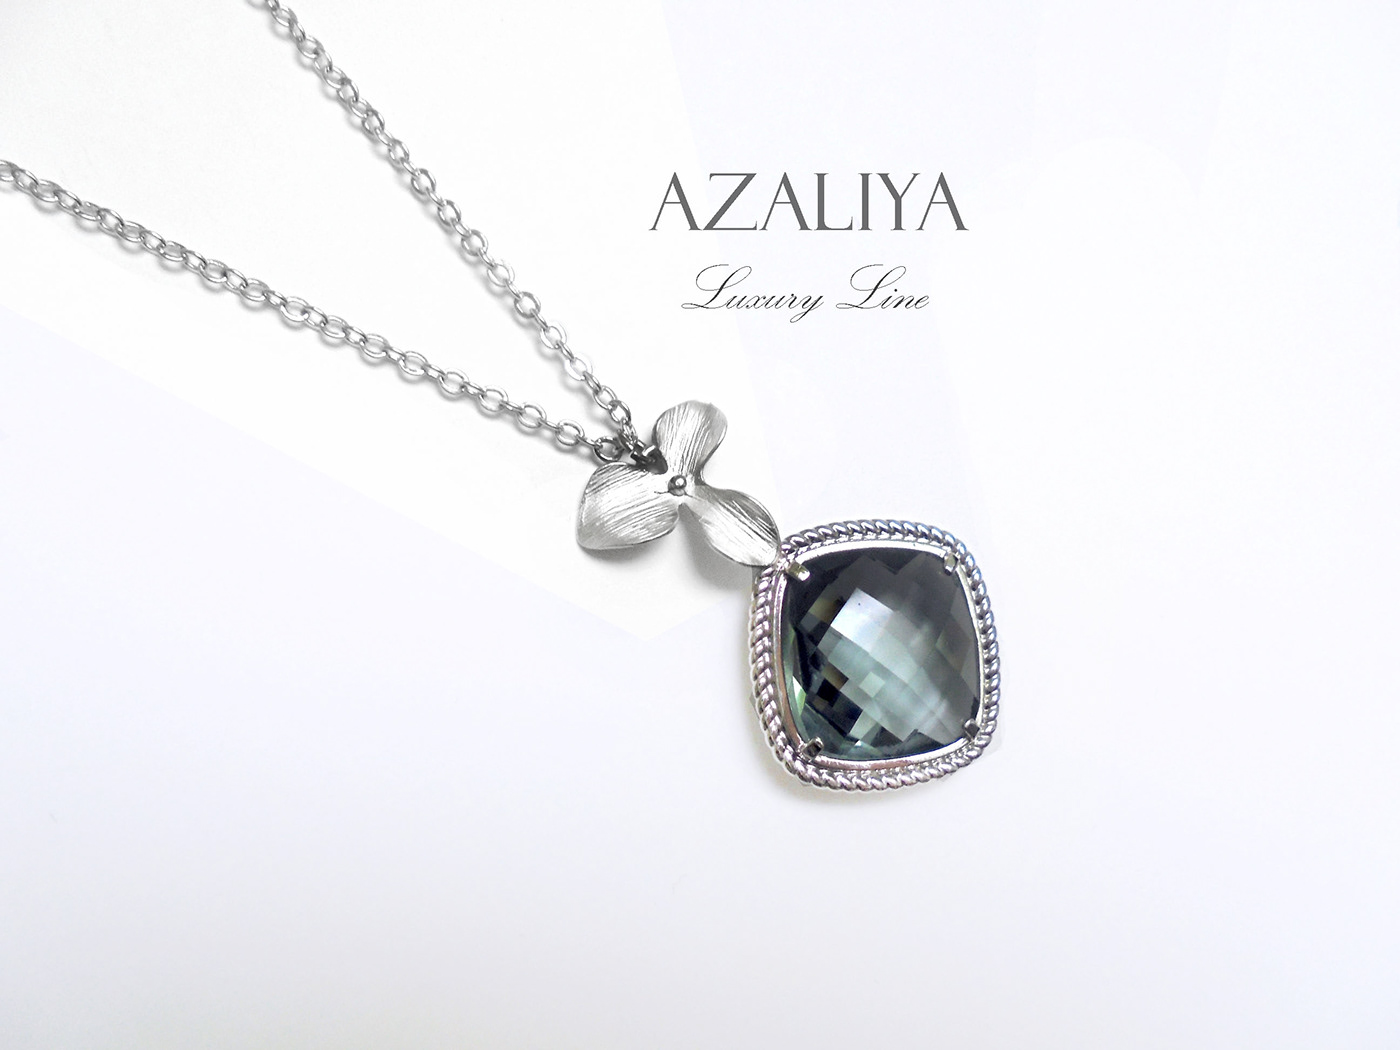 editorial styling Jewelry Design  Schmuckdesign Kreativleitung fotografie Photography  branding  fashion styling Azaliya Luxury Line azaliya jewelry